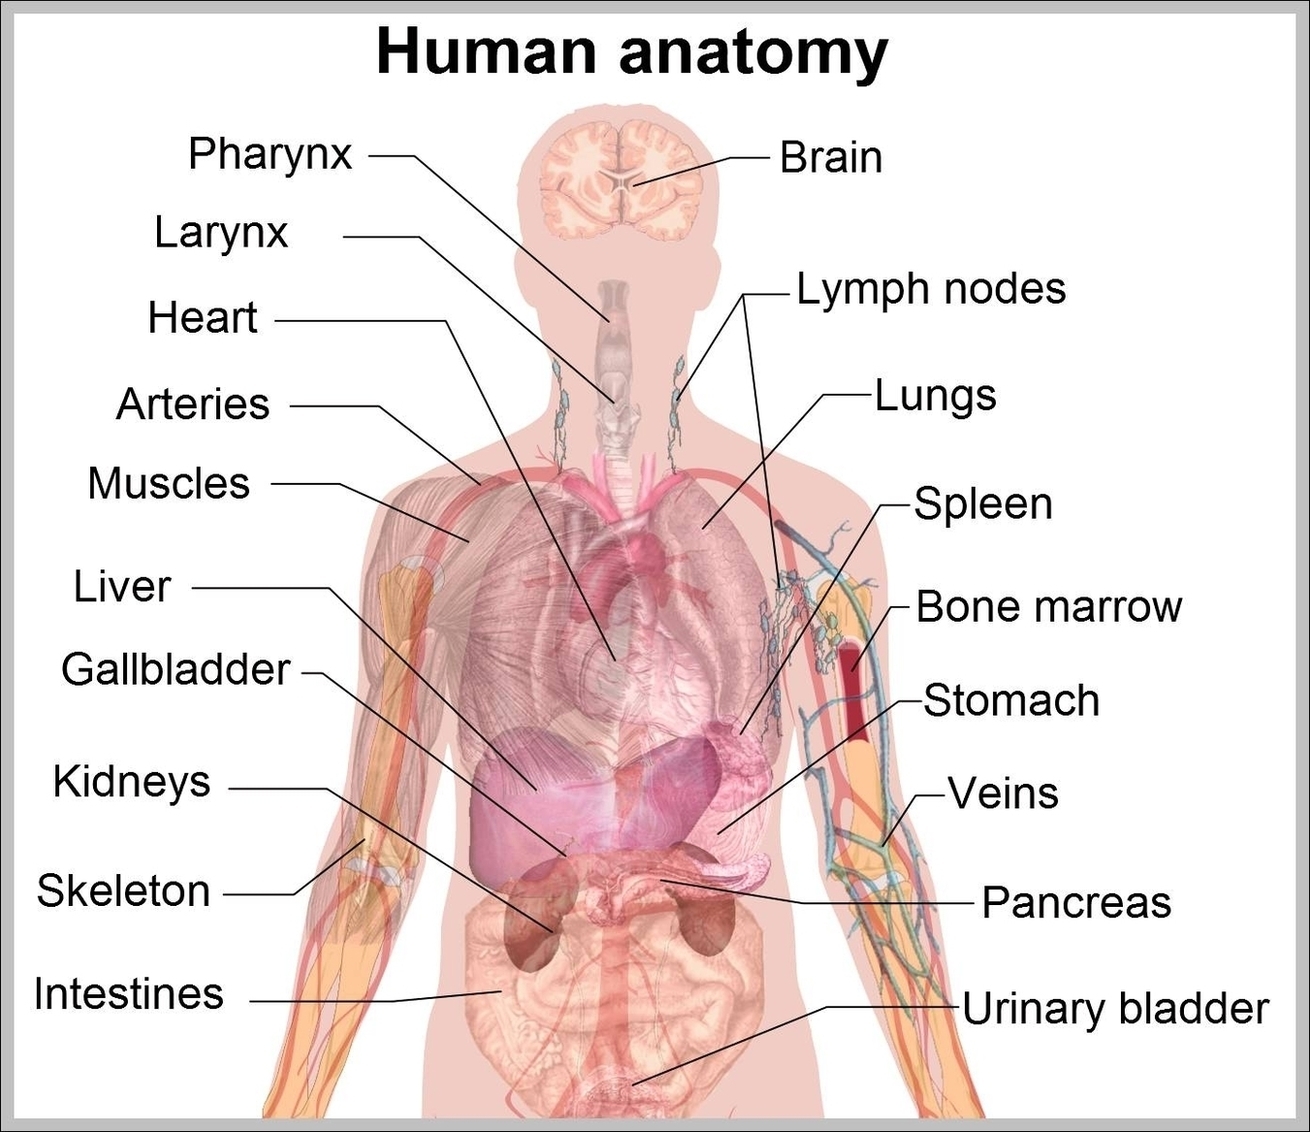 Anatomical Human Body Image